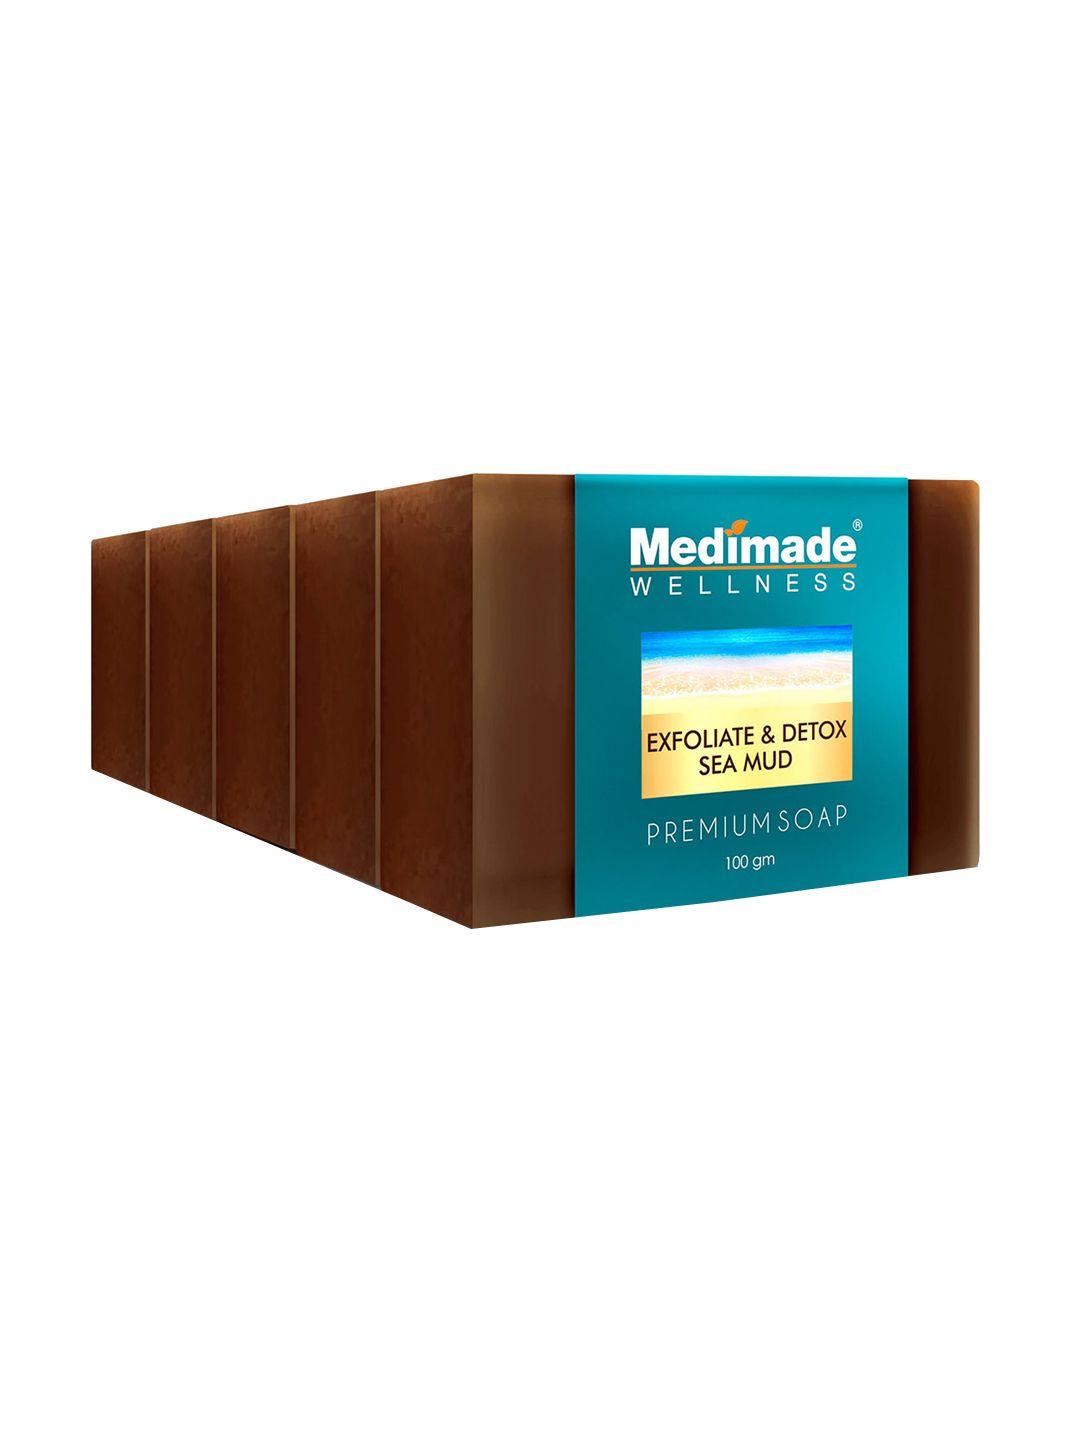 medimade set of 5 exfoliate & detox sea mud premium facial soap - 100 g each